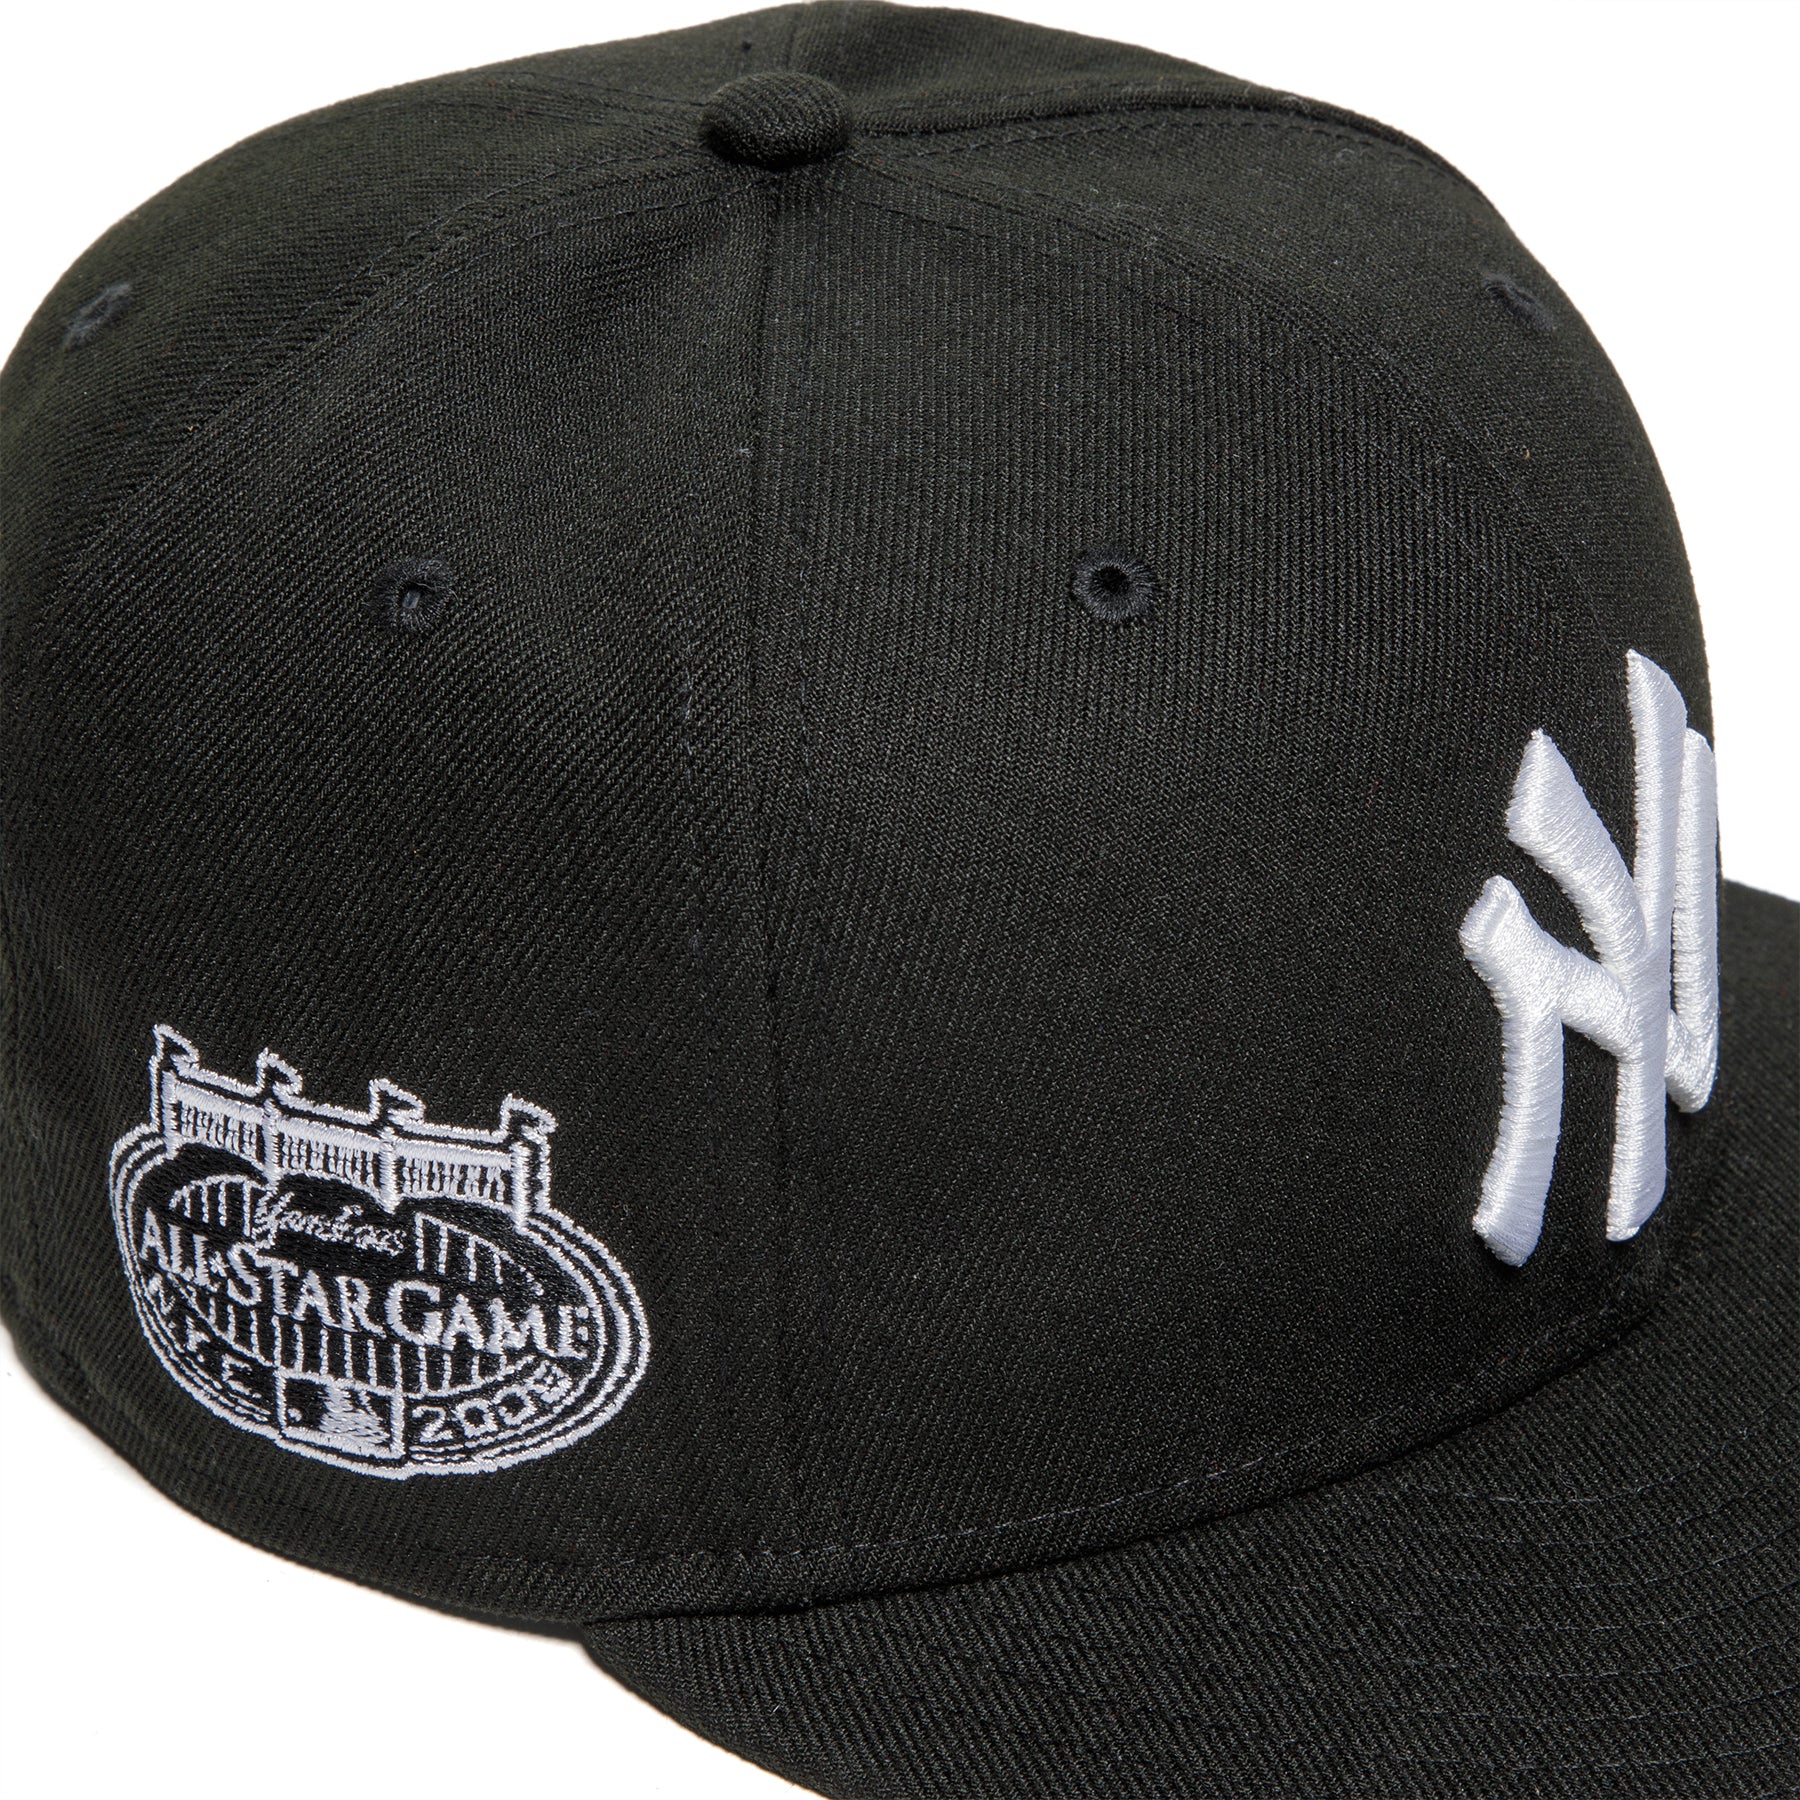 Official New Era New York Yankees MLB Split Front OTC 59FIFTY